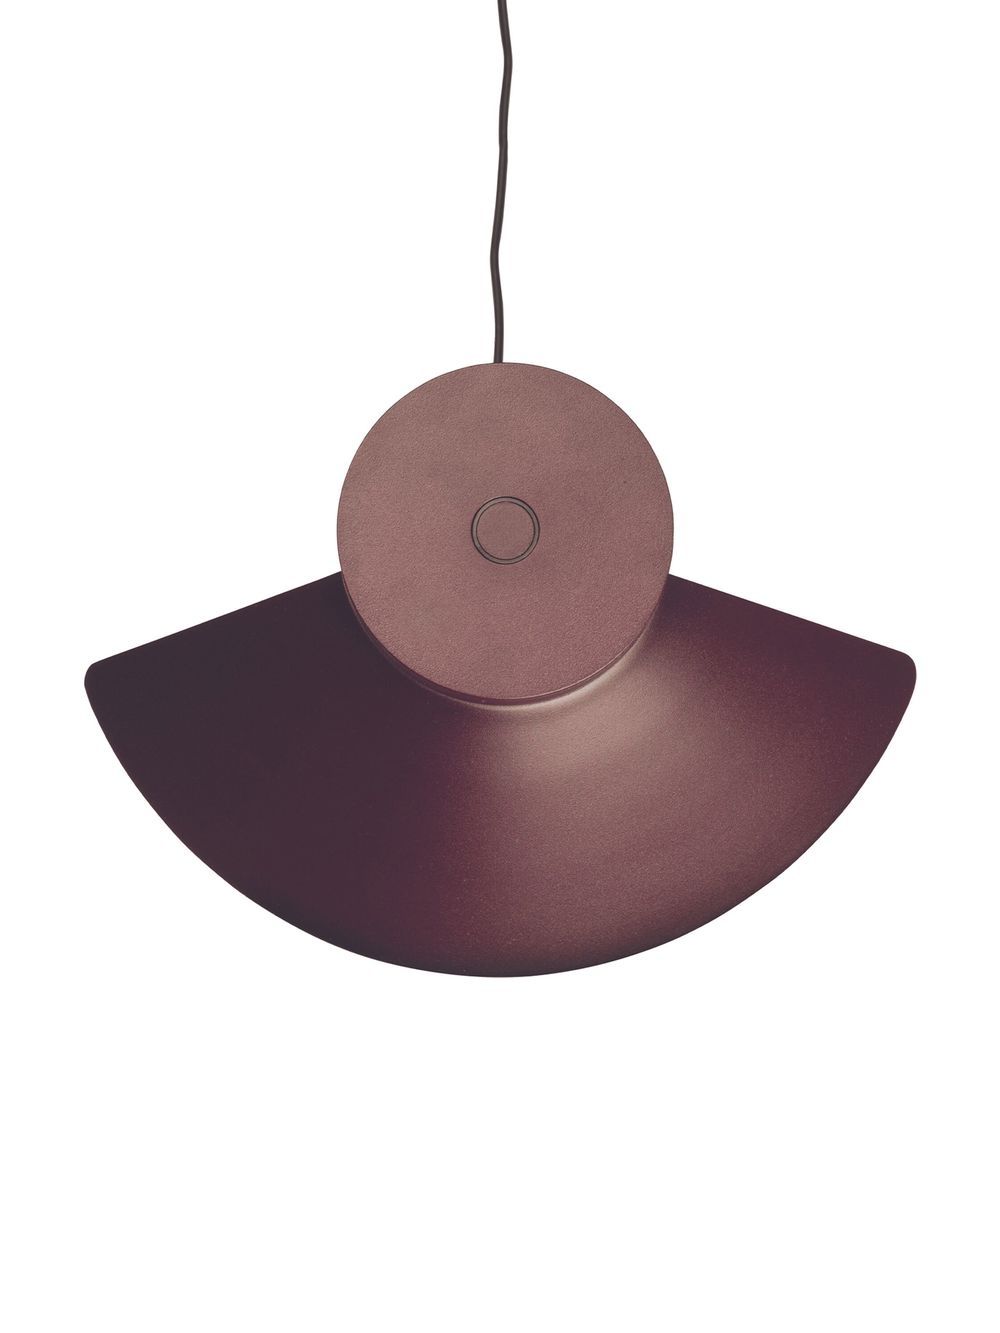 Shop Karakter Riscio Table Lamp In Rot